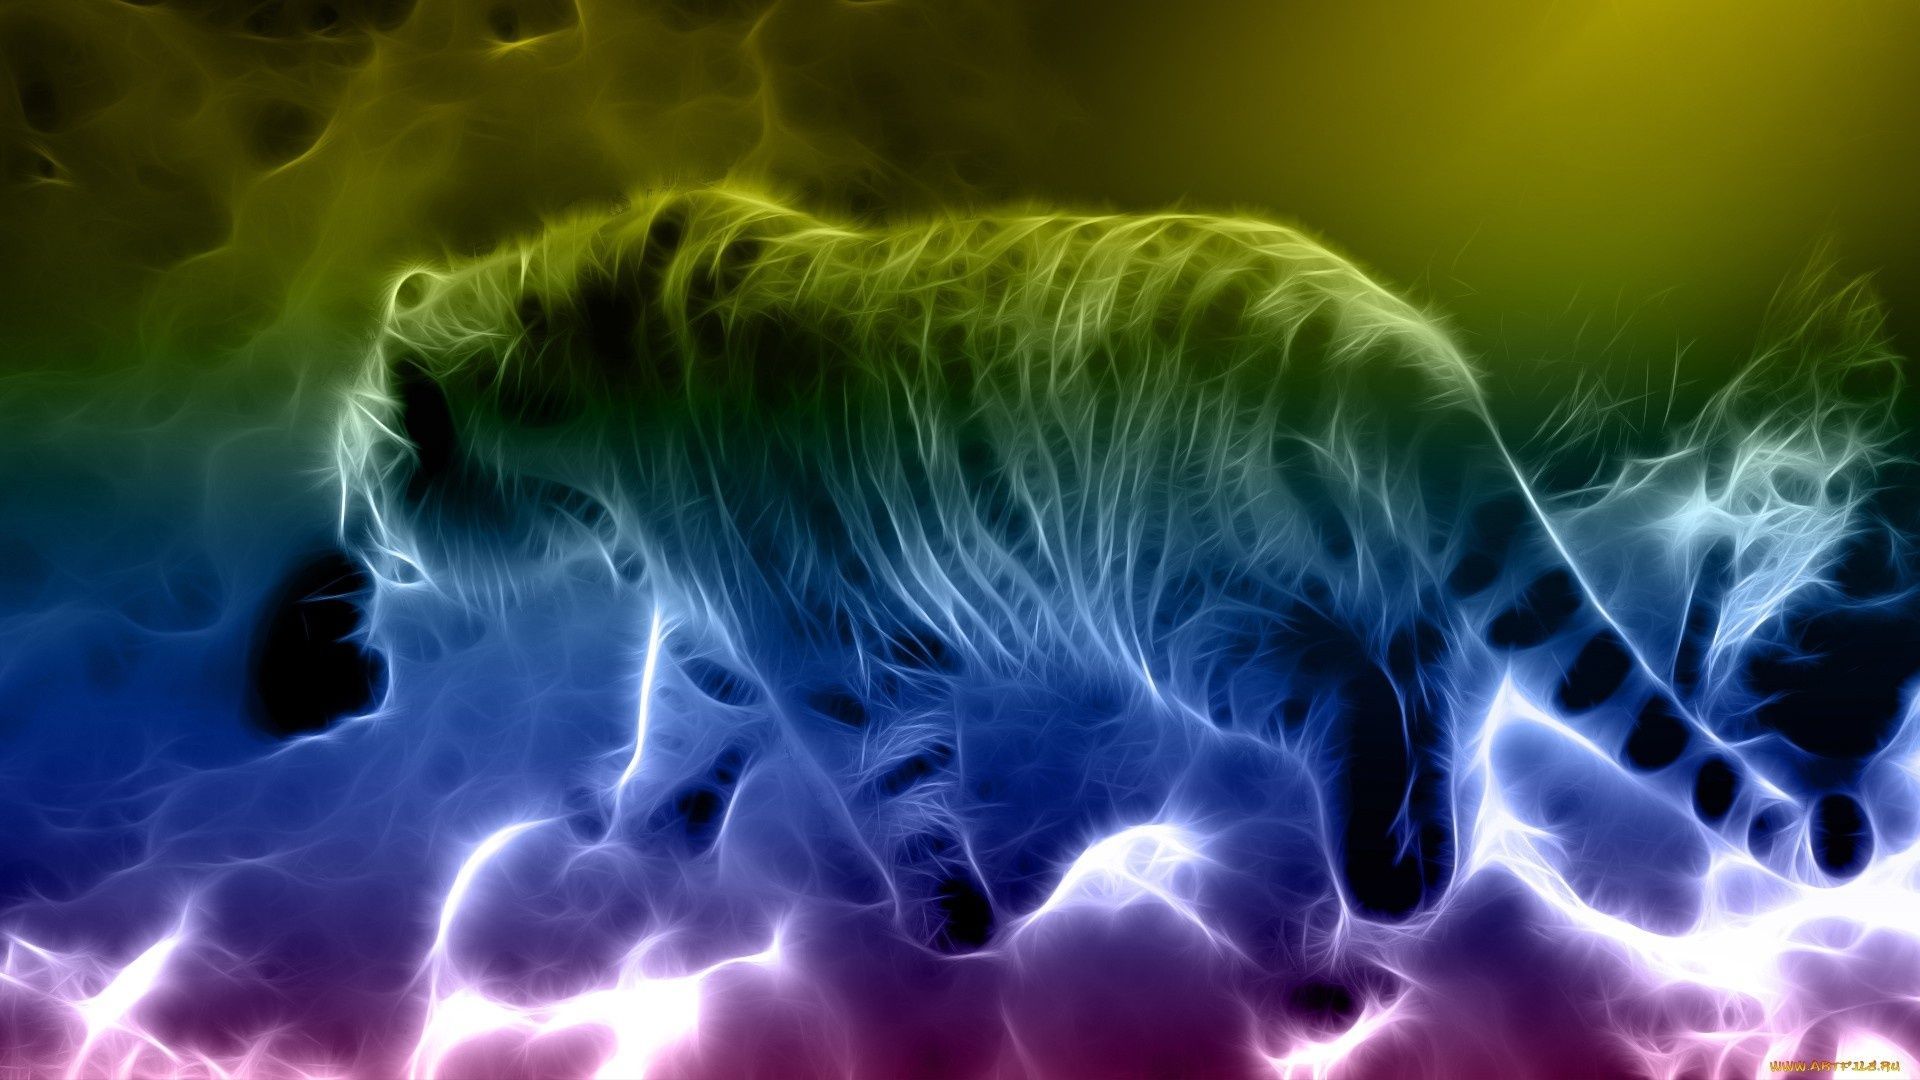 Art abstract fractal animals cats tiger rainbow predator wildlife wallpaperx1080. Tiger image, Predator art, Tiger wallpaper